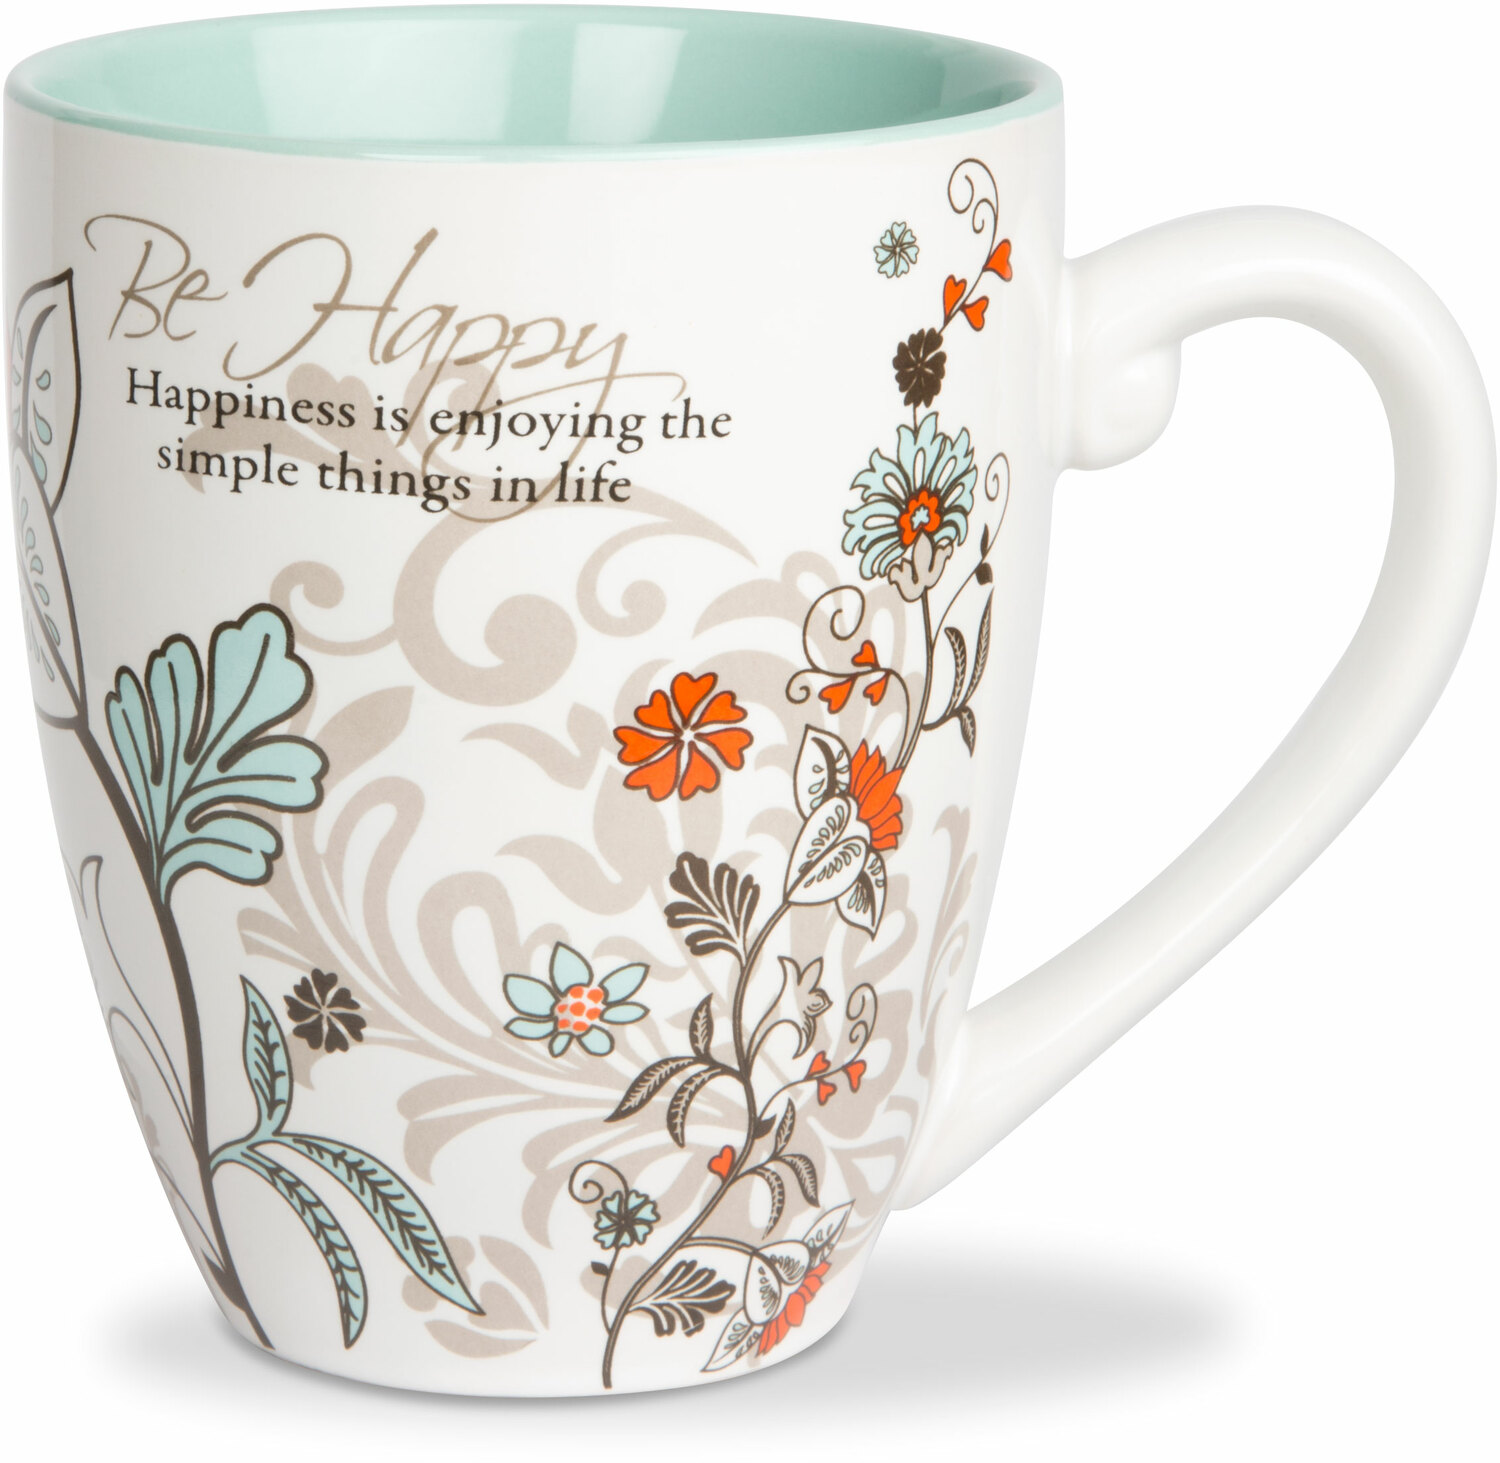 Be Happy by Mark My Words - Large Flower Print Joy Coffee Mug, 20 oz